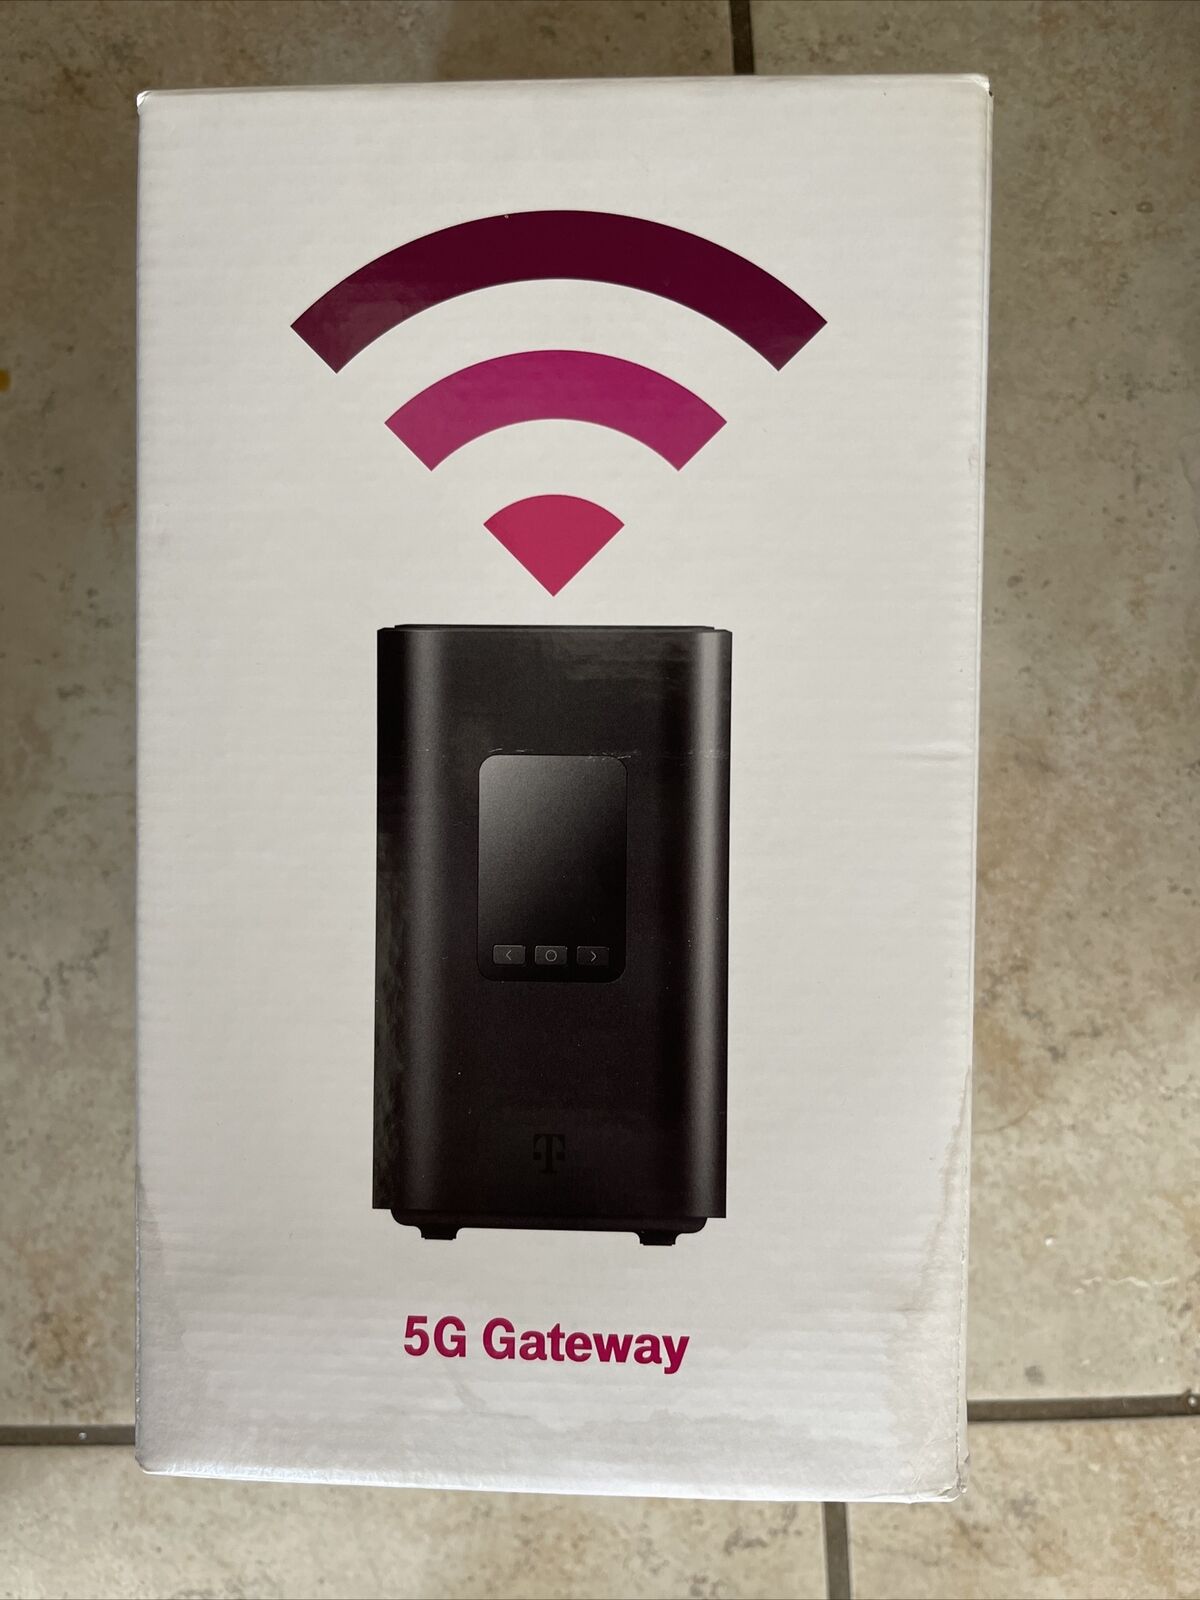 NEW - T-Mobile ARC KVD21 5G Home Internet WI-FI Gateway in Black Tower 5G